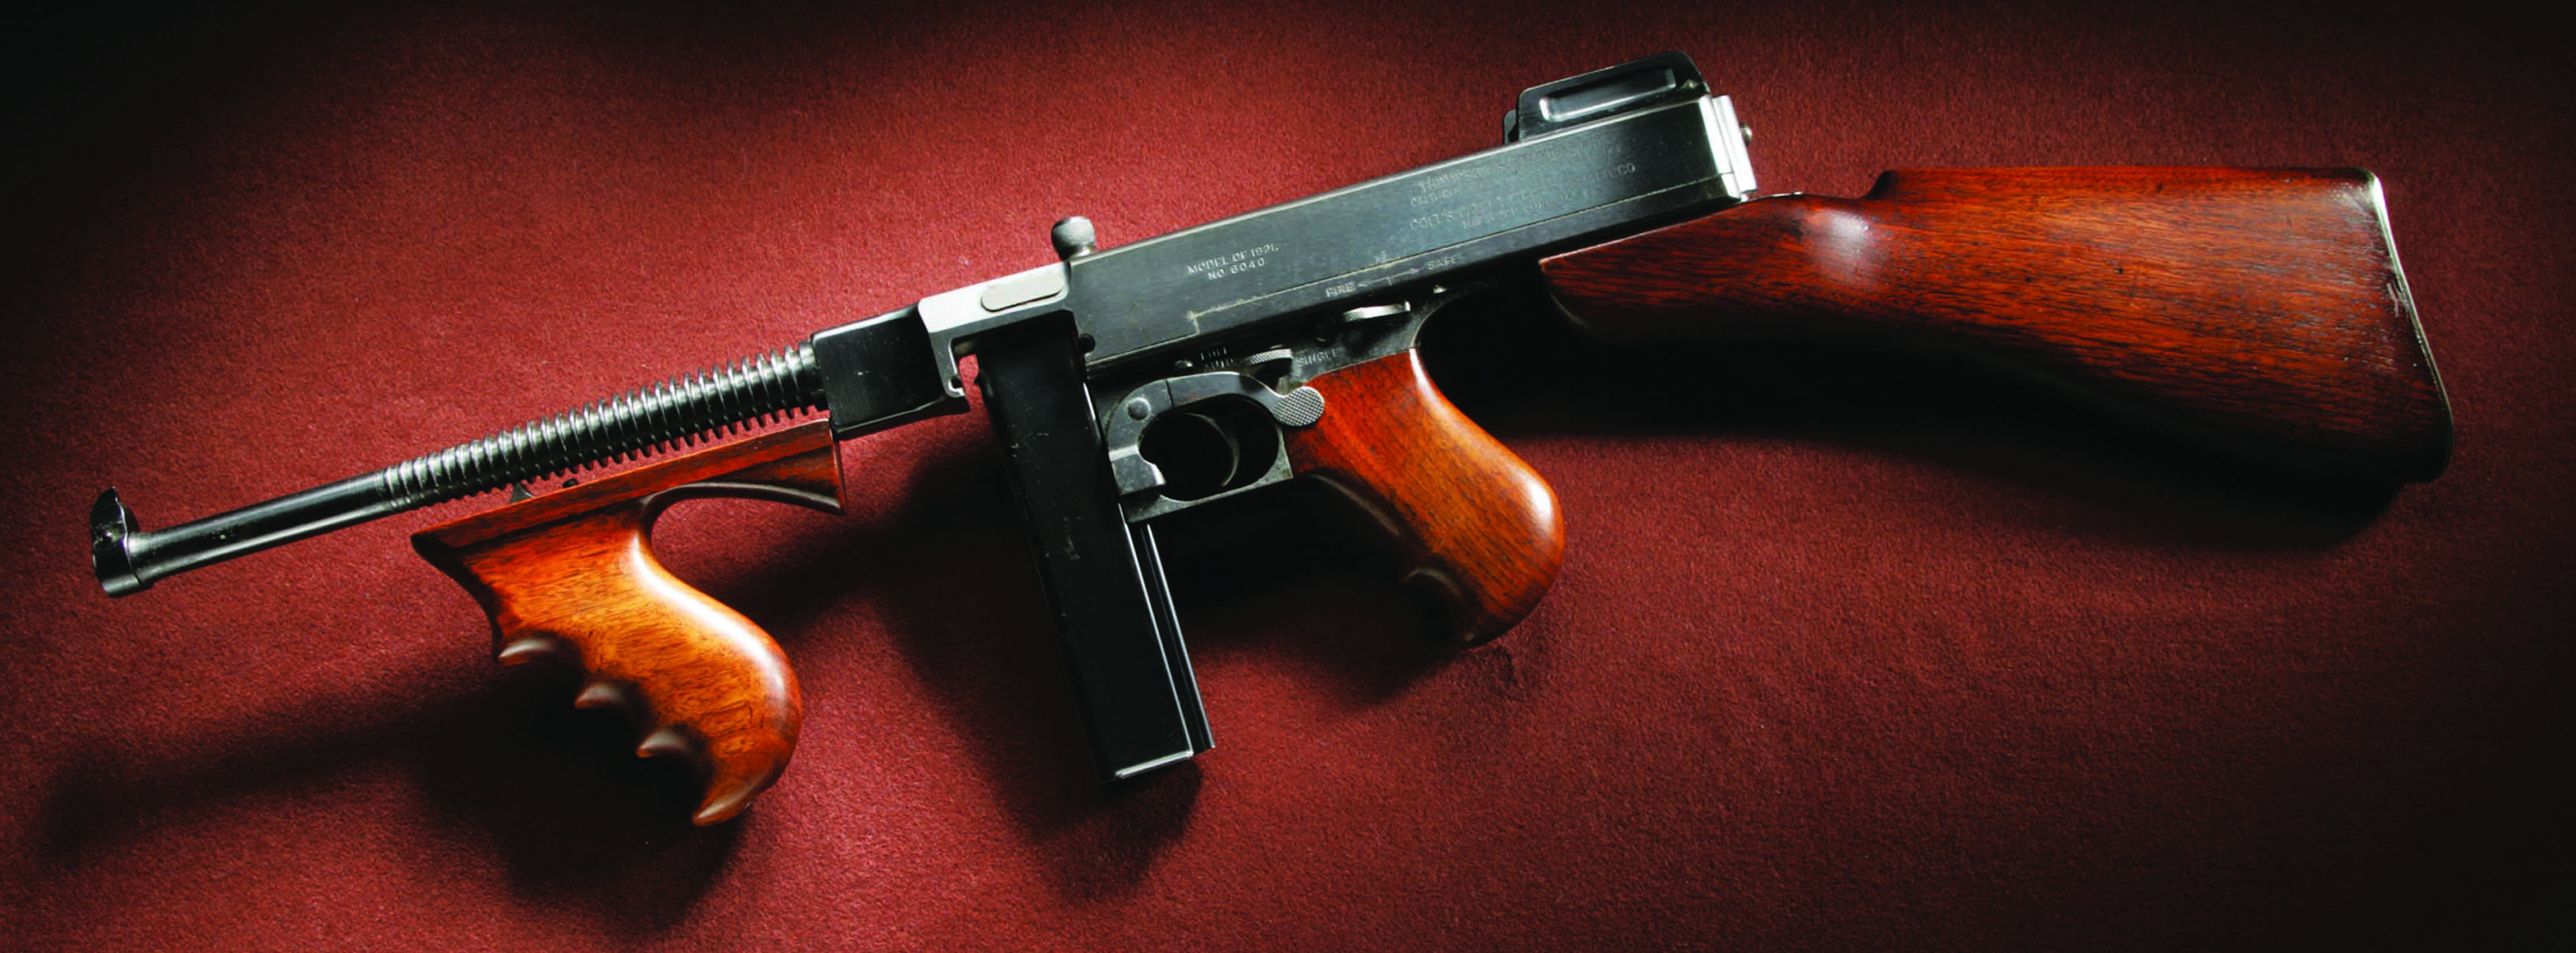 mint condition Thompson submachine gun